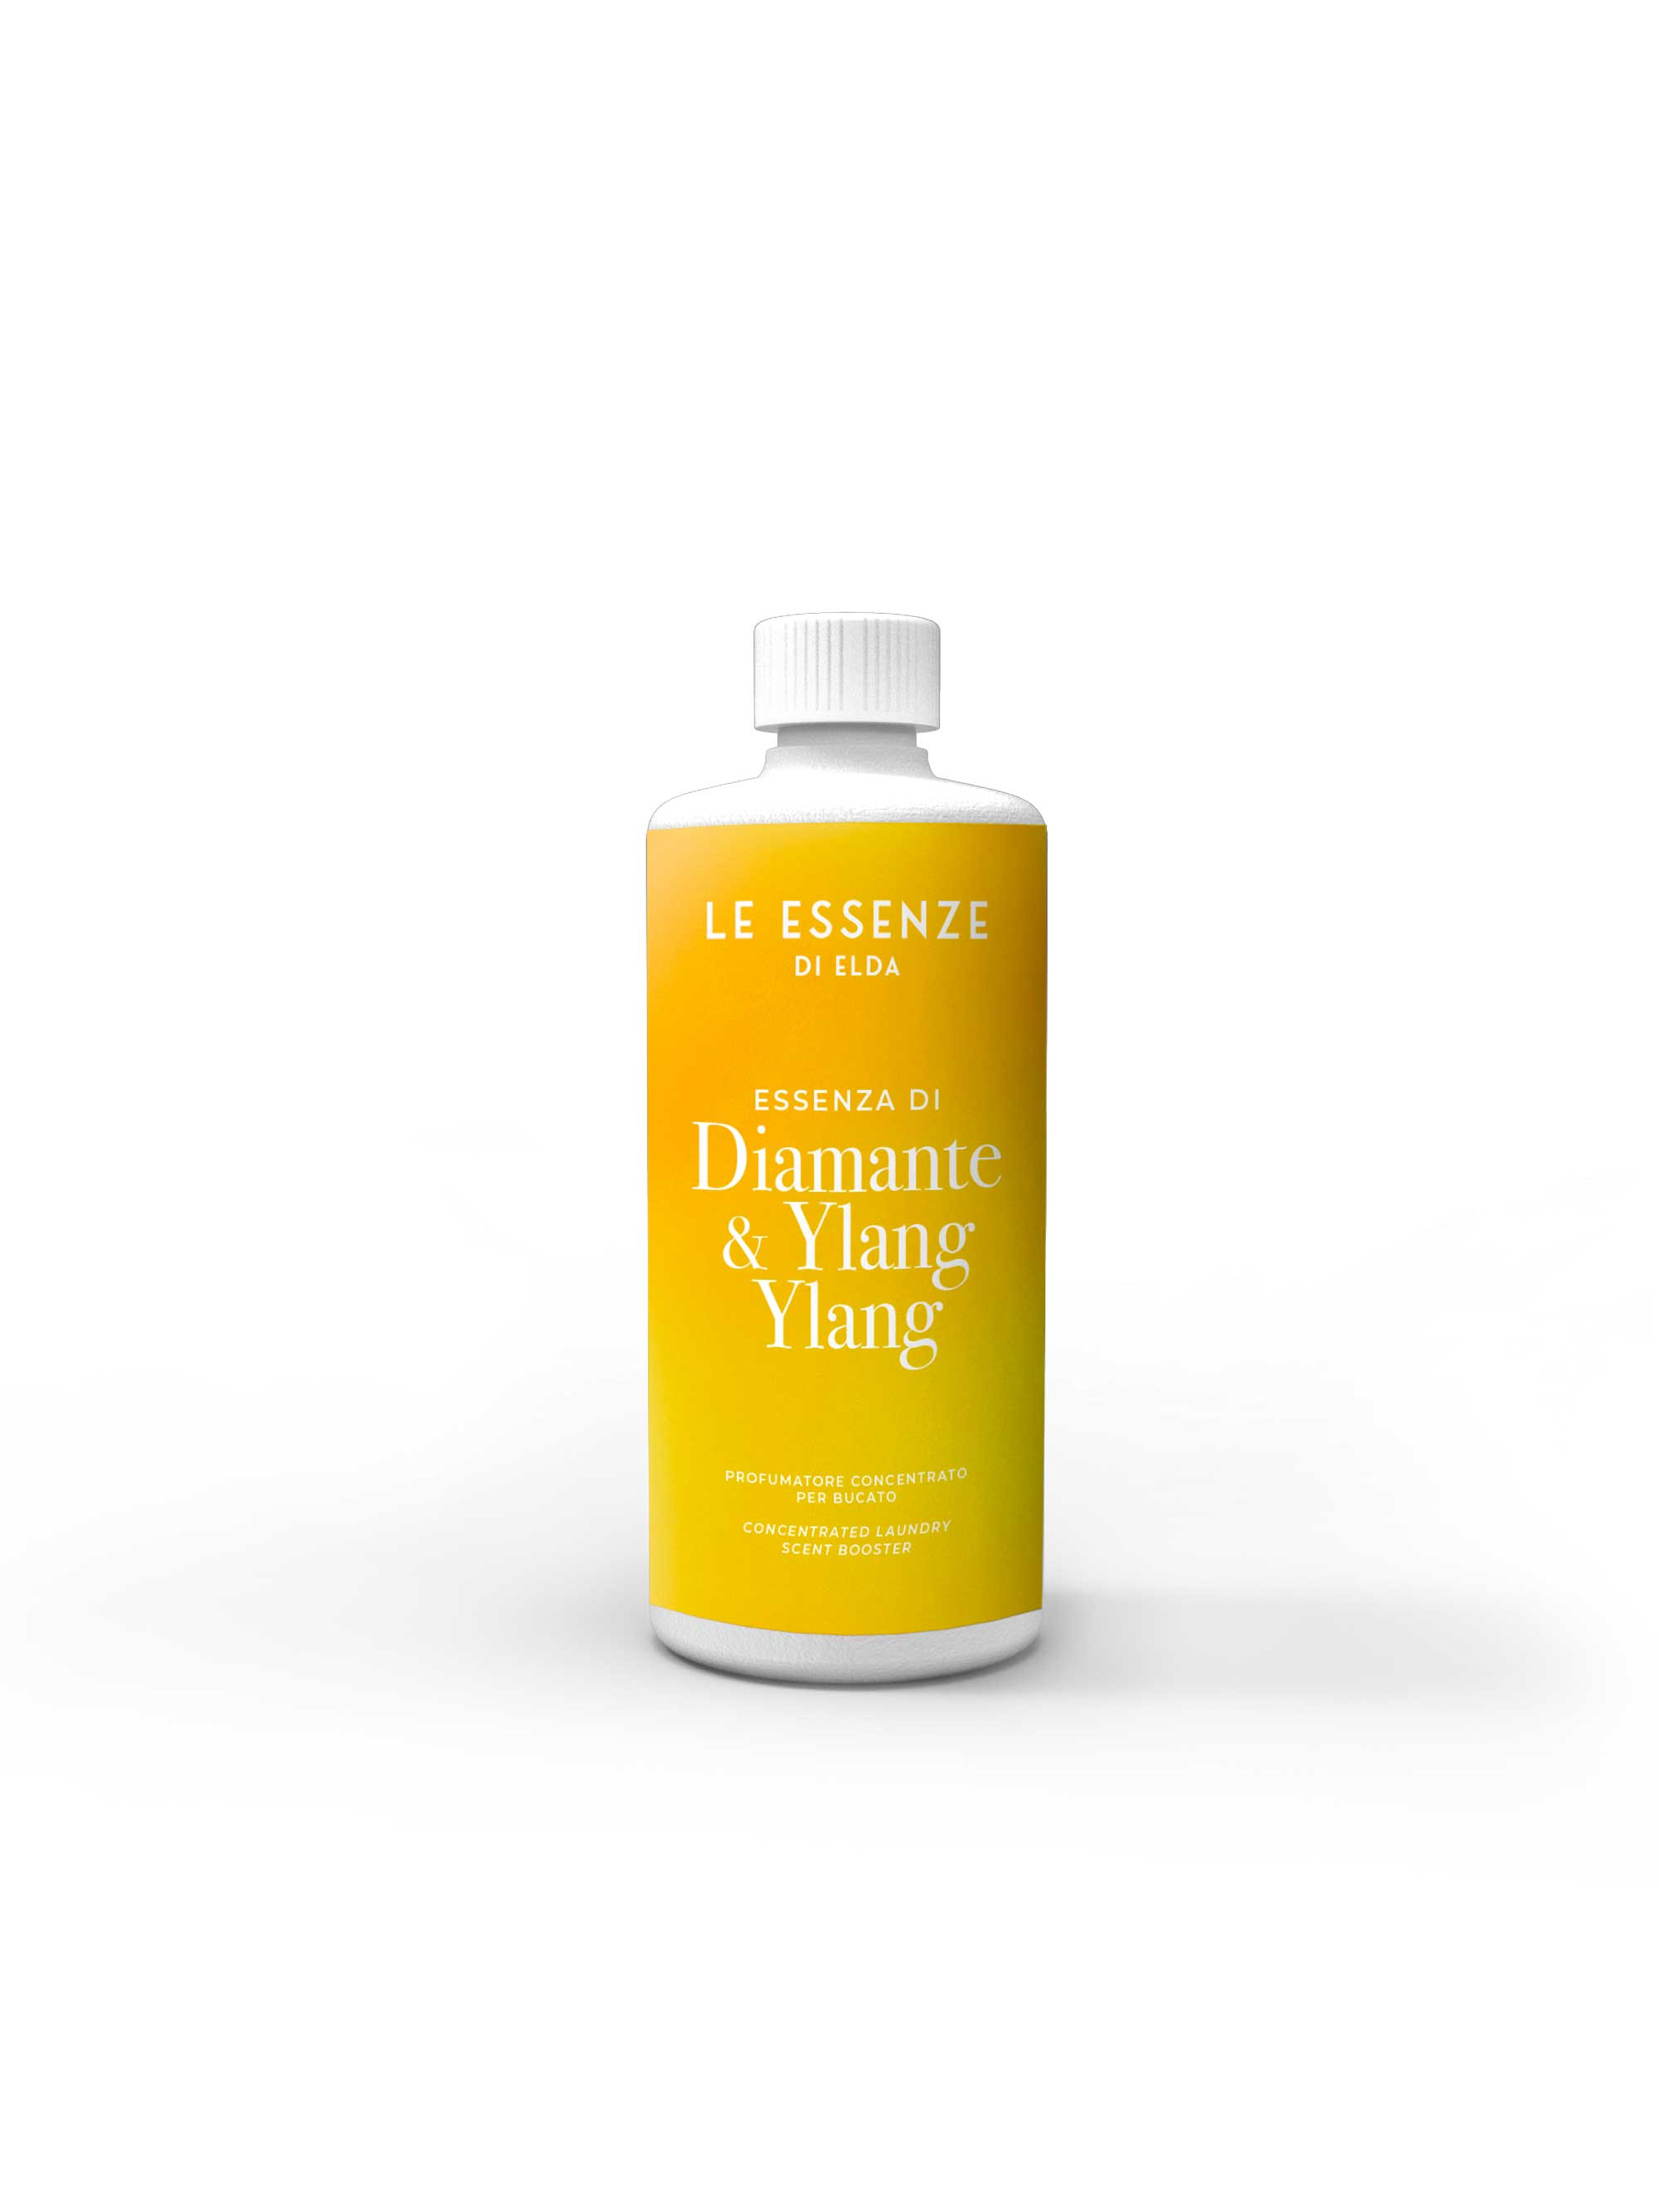 Essenza di Diamante & Ylang Ylang - Perfumer for laundry 500 ml